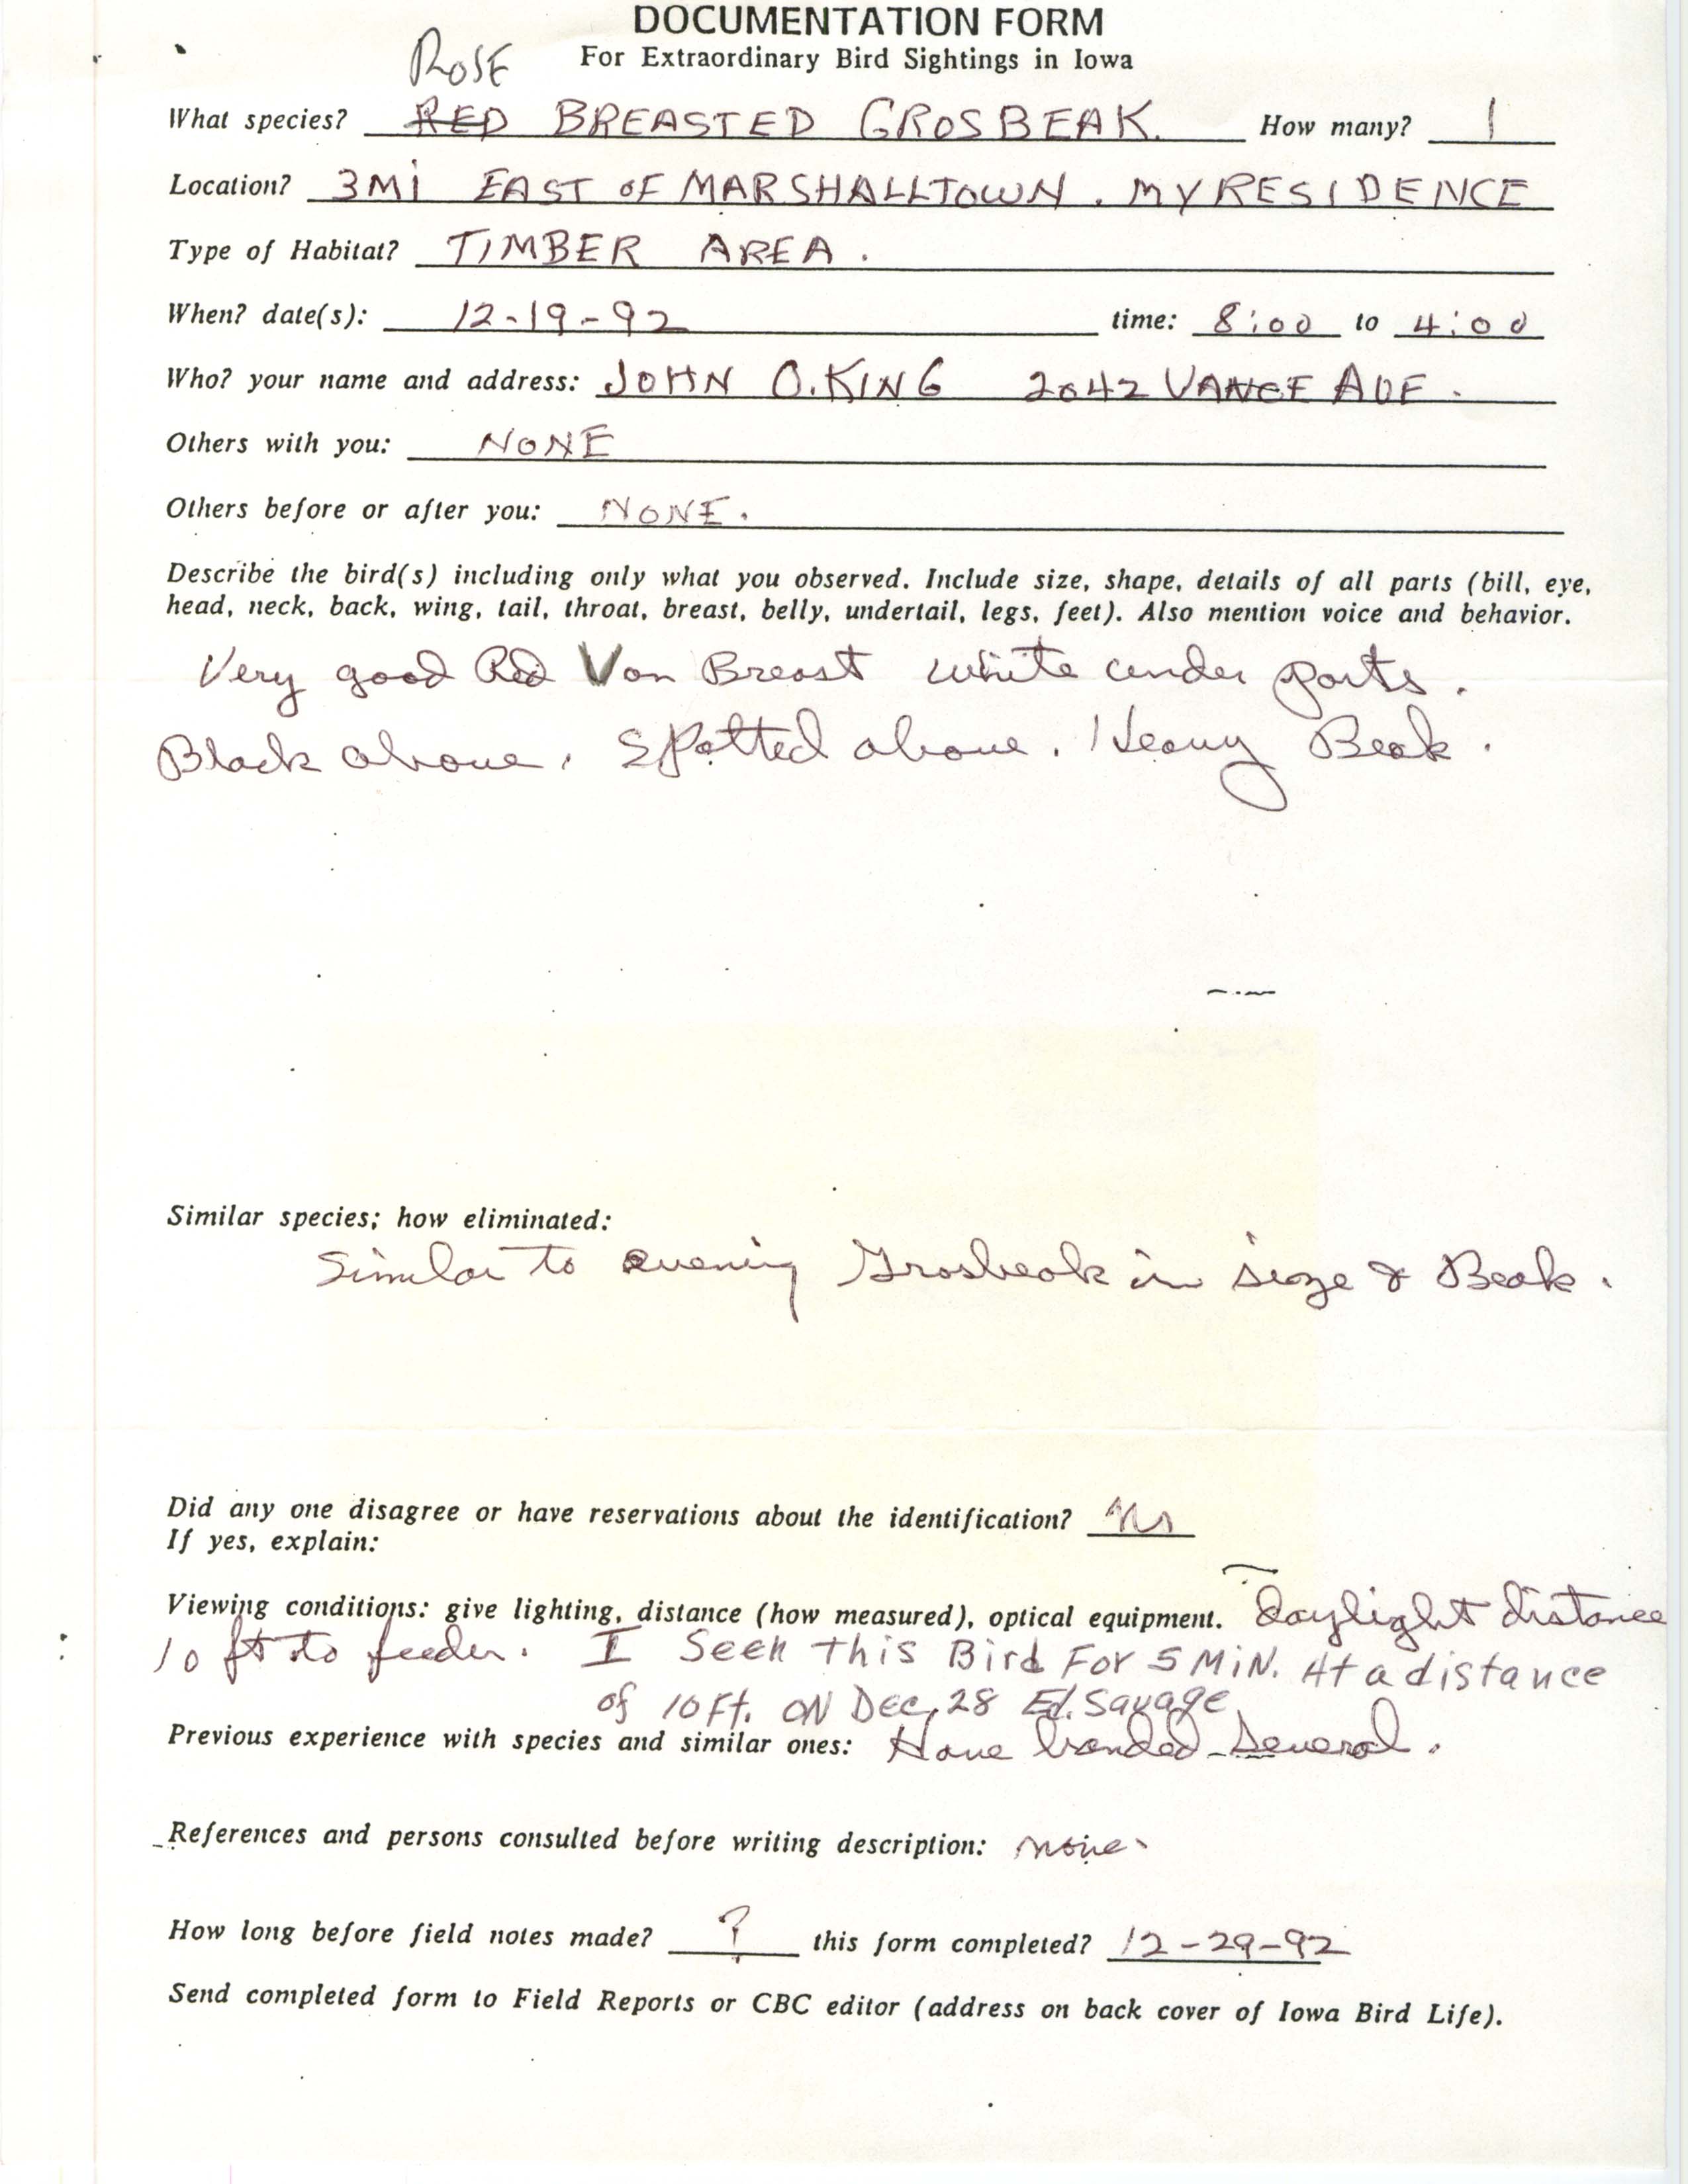 Rare bird documentation form for Rose-breasted Grosbeak east of Marshalltown in 1992